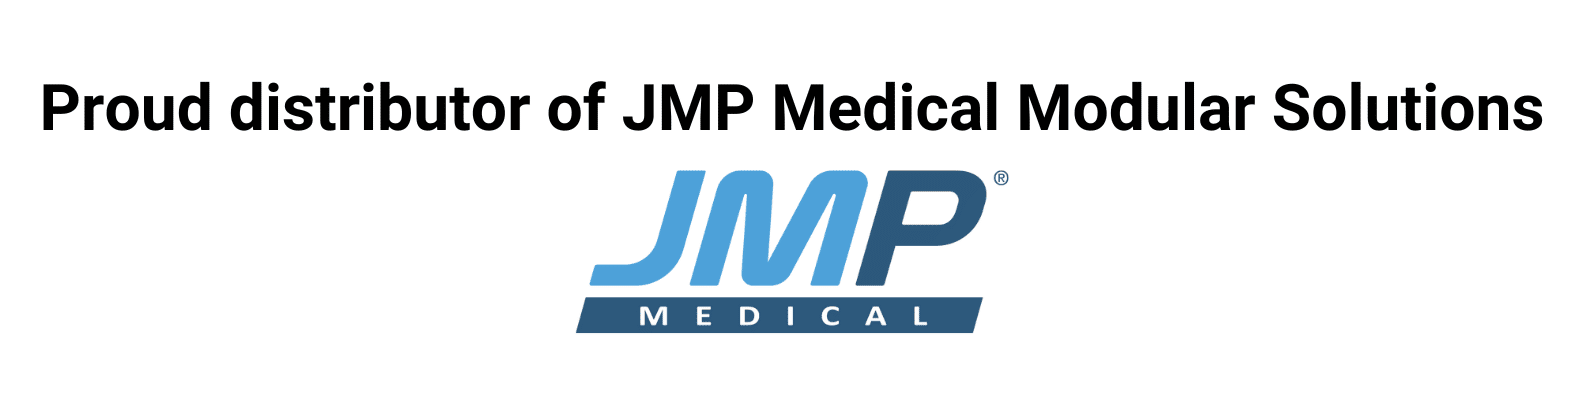 Proud distributor of JMP Medical Modular Solutions